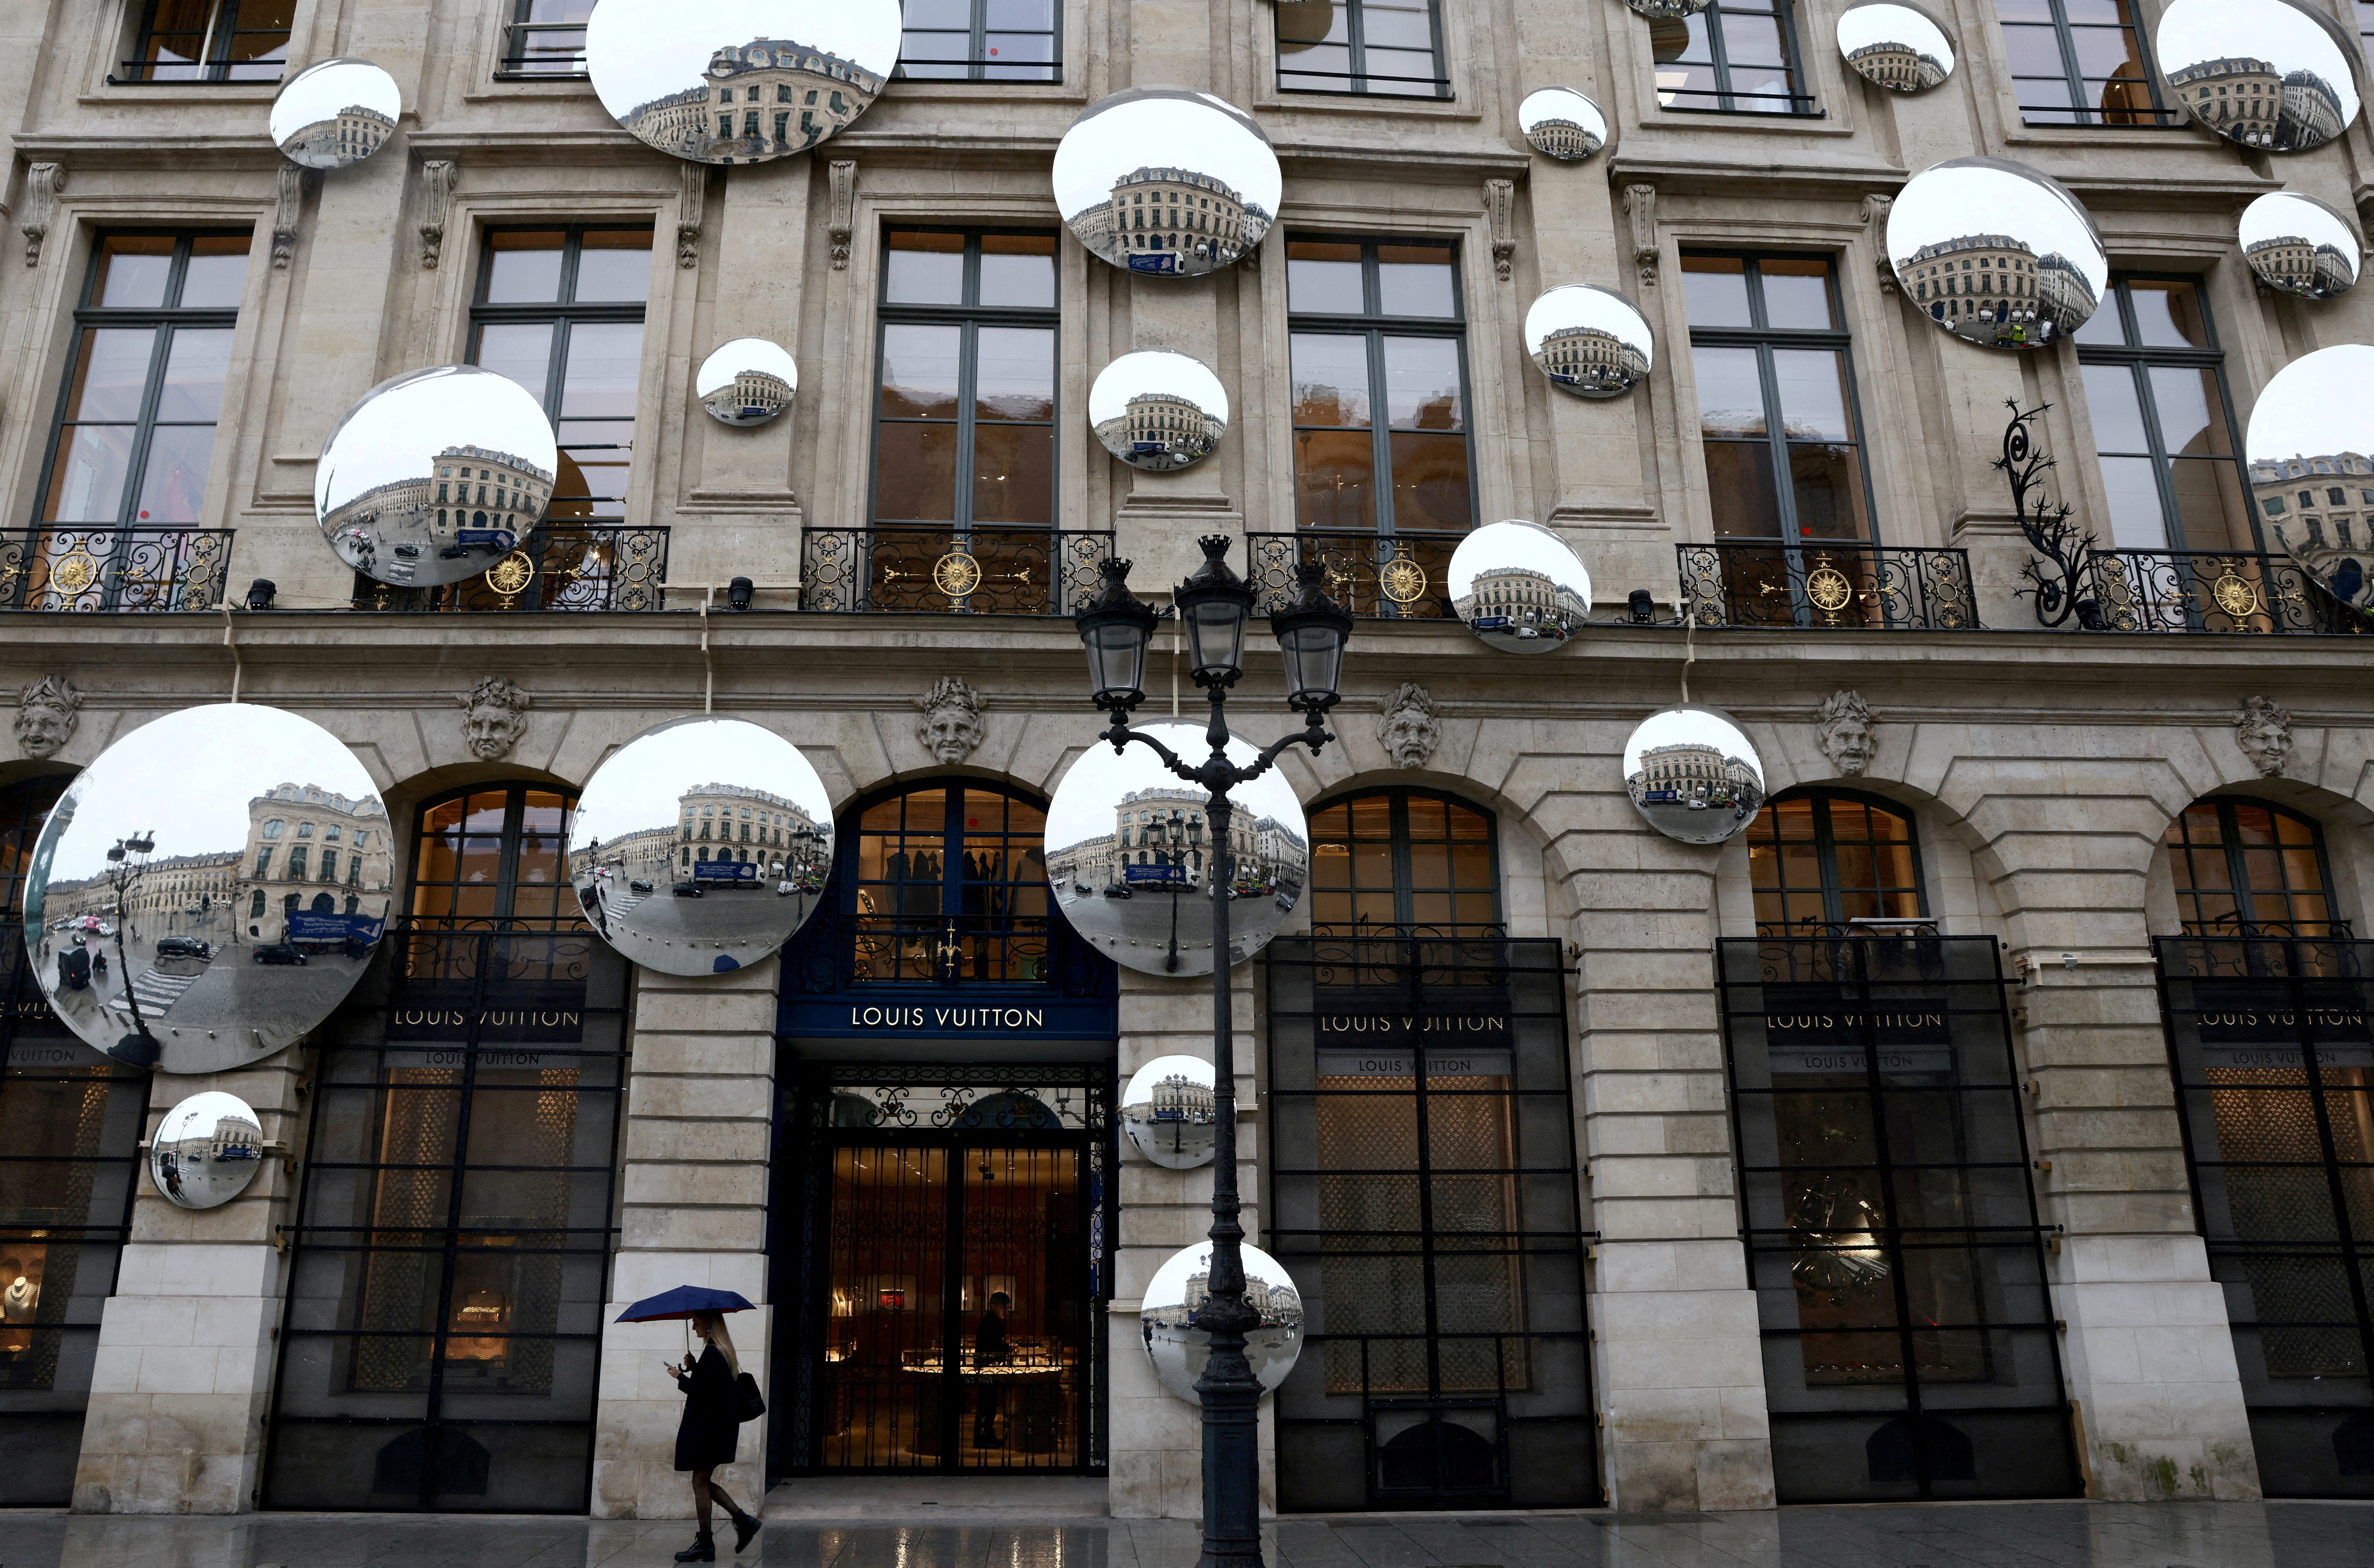 The luxury retailer Louis Vuitton store at Place Vendome in Paris